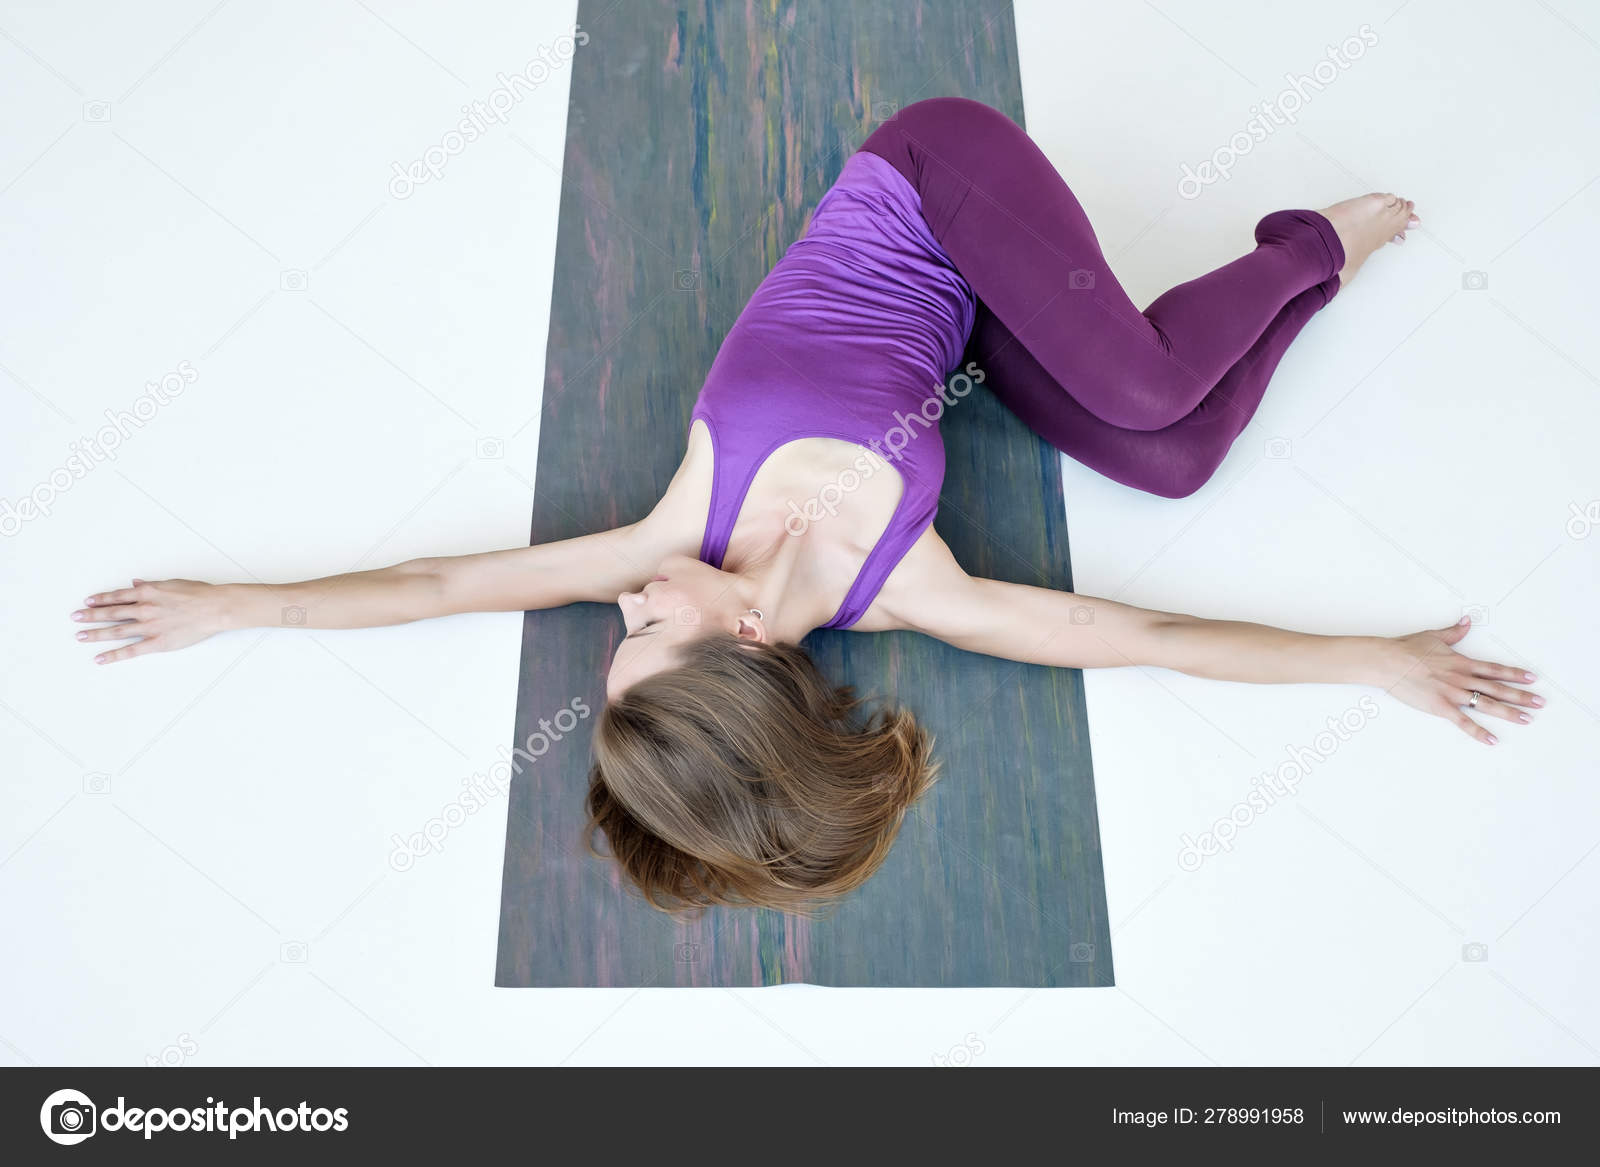 Yoga Split: Over 14,581 Royalty-Free Licensable Stock Photos | Shutterstock